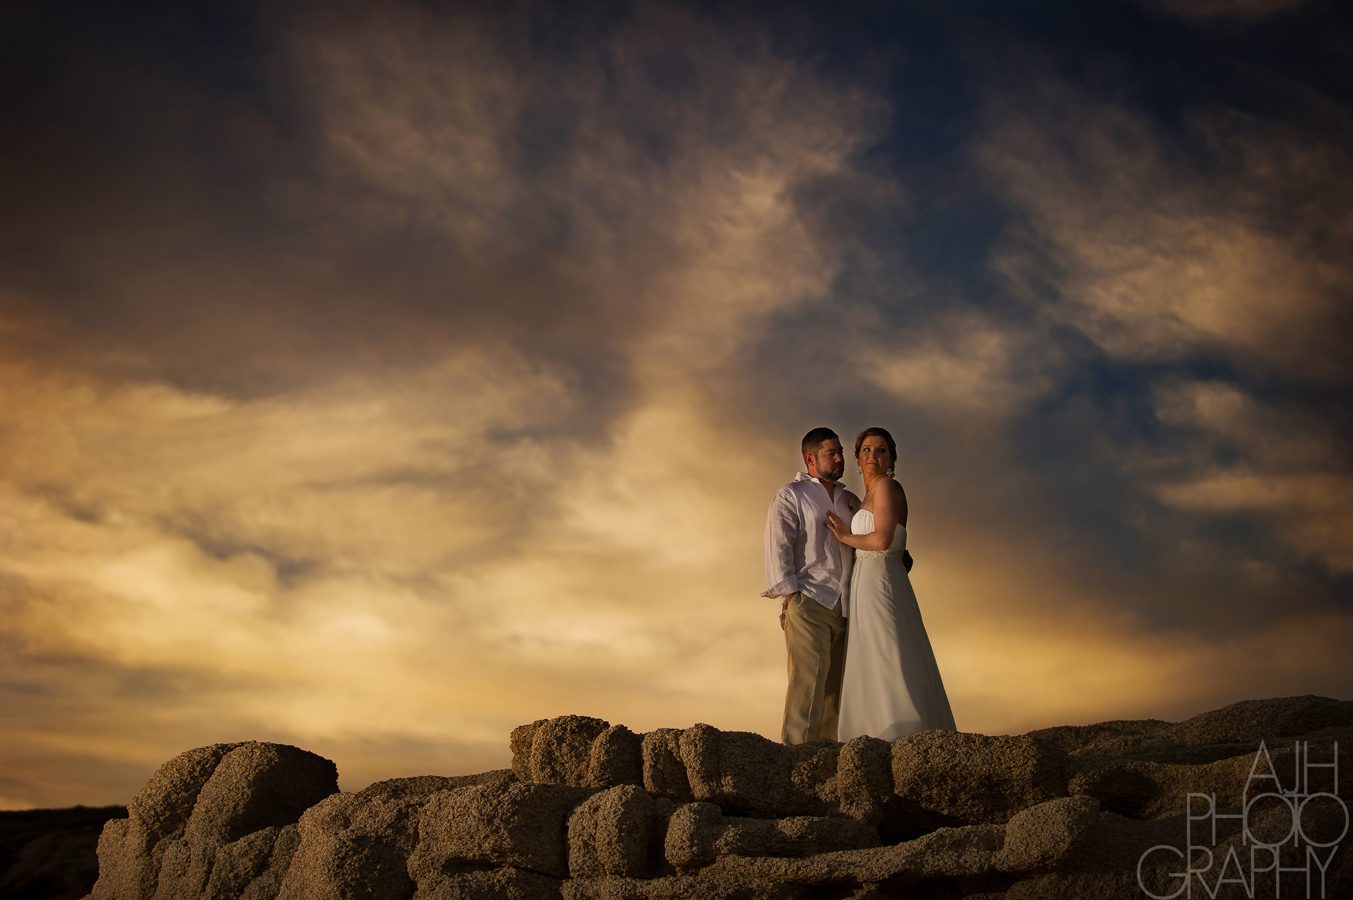 Destination-Wedding-Photographer-AJH Photographer-AJH-Photography